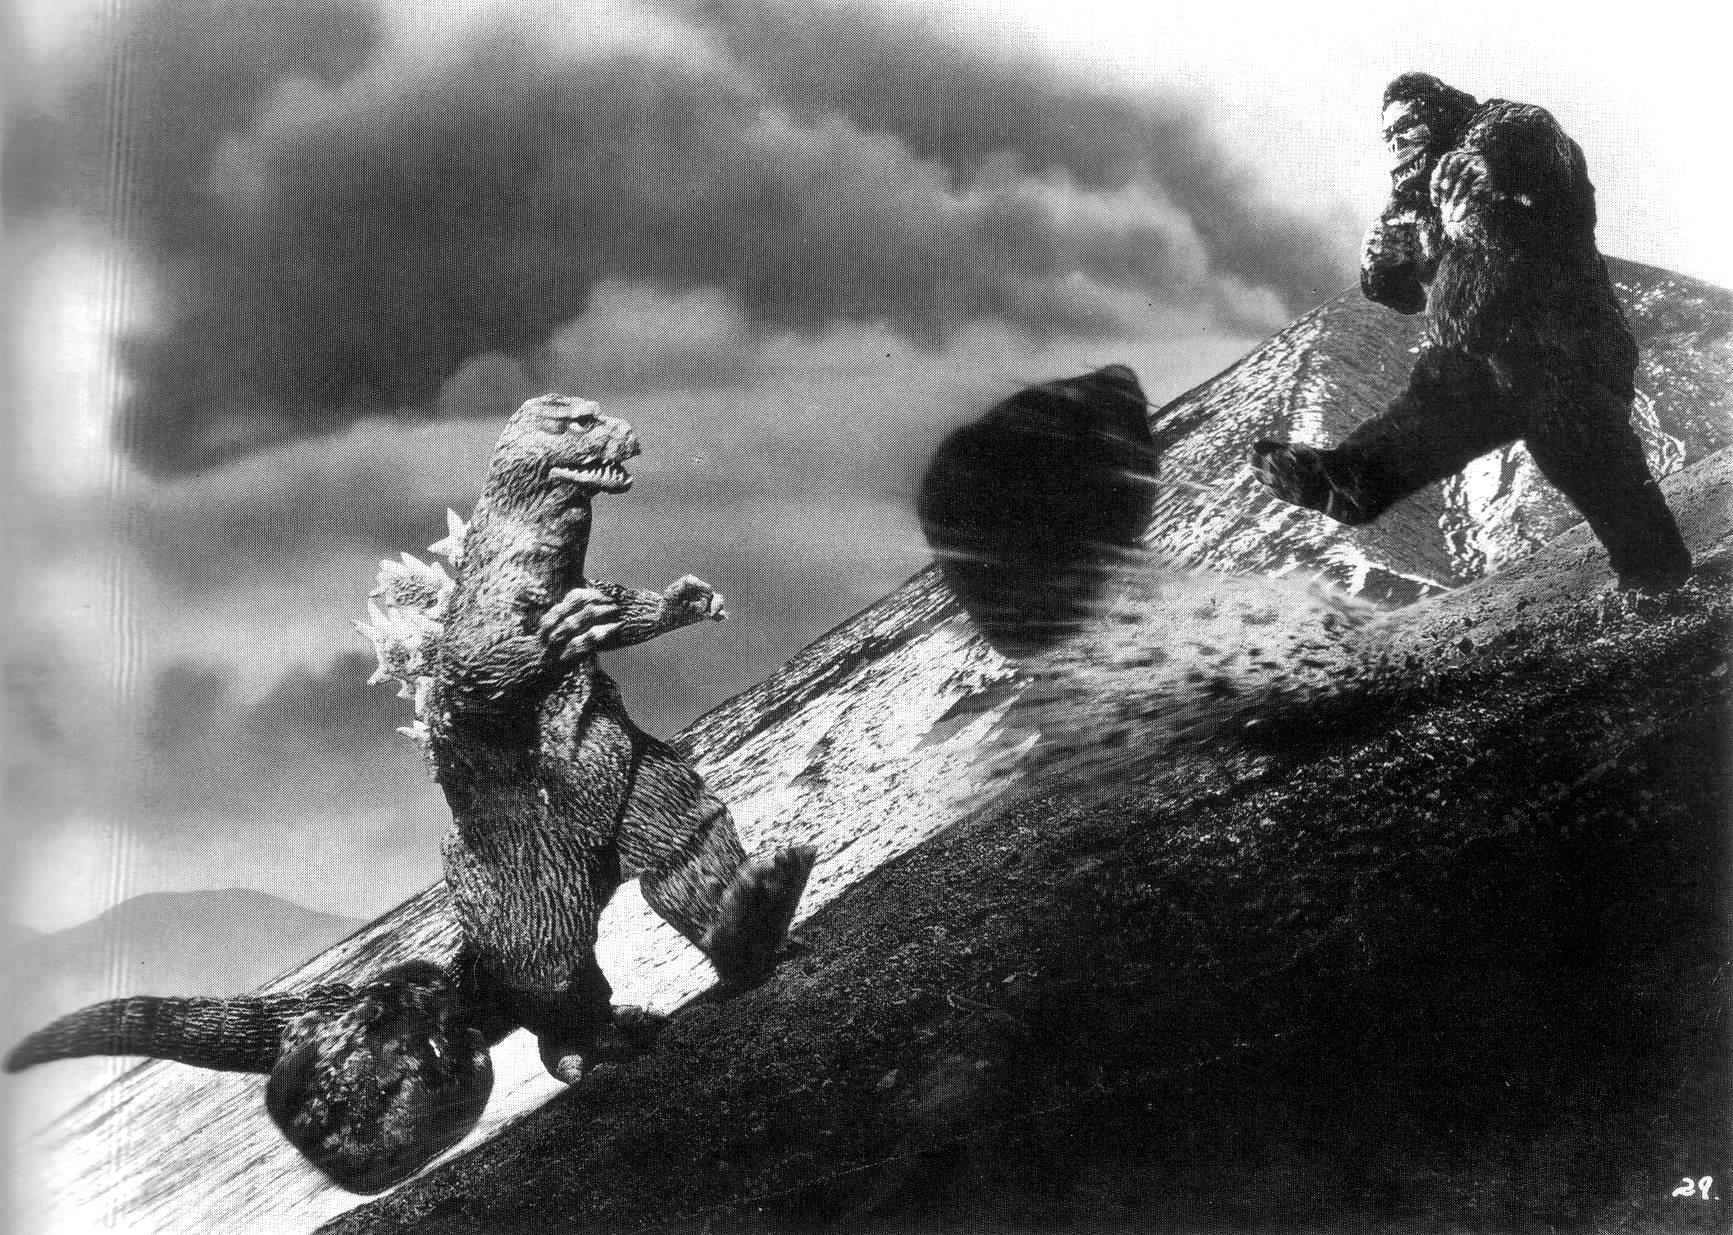 Godzilla Vs King Kong